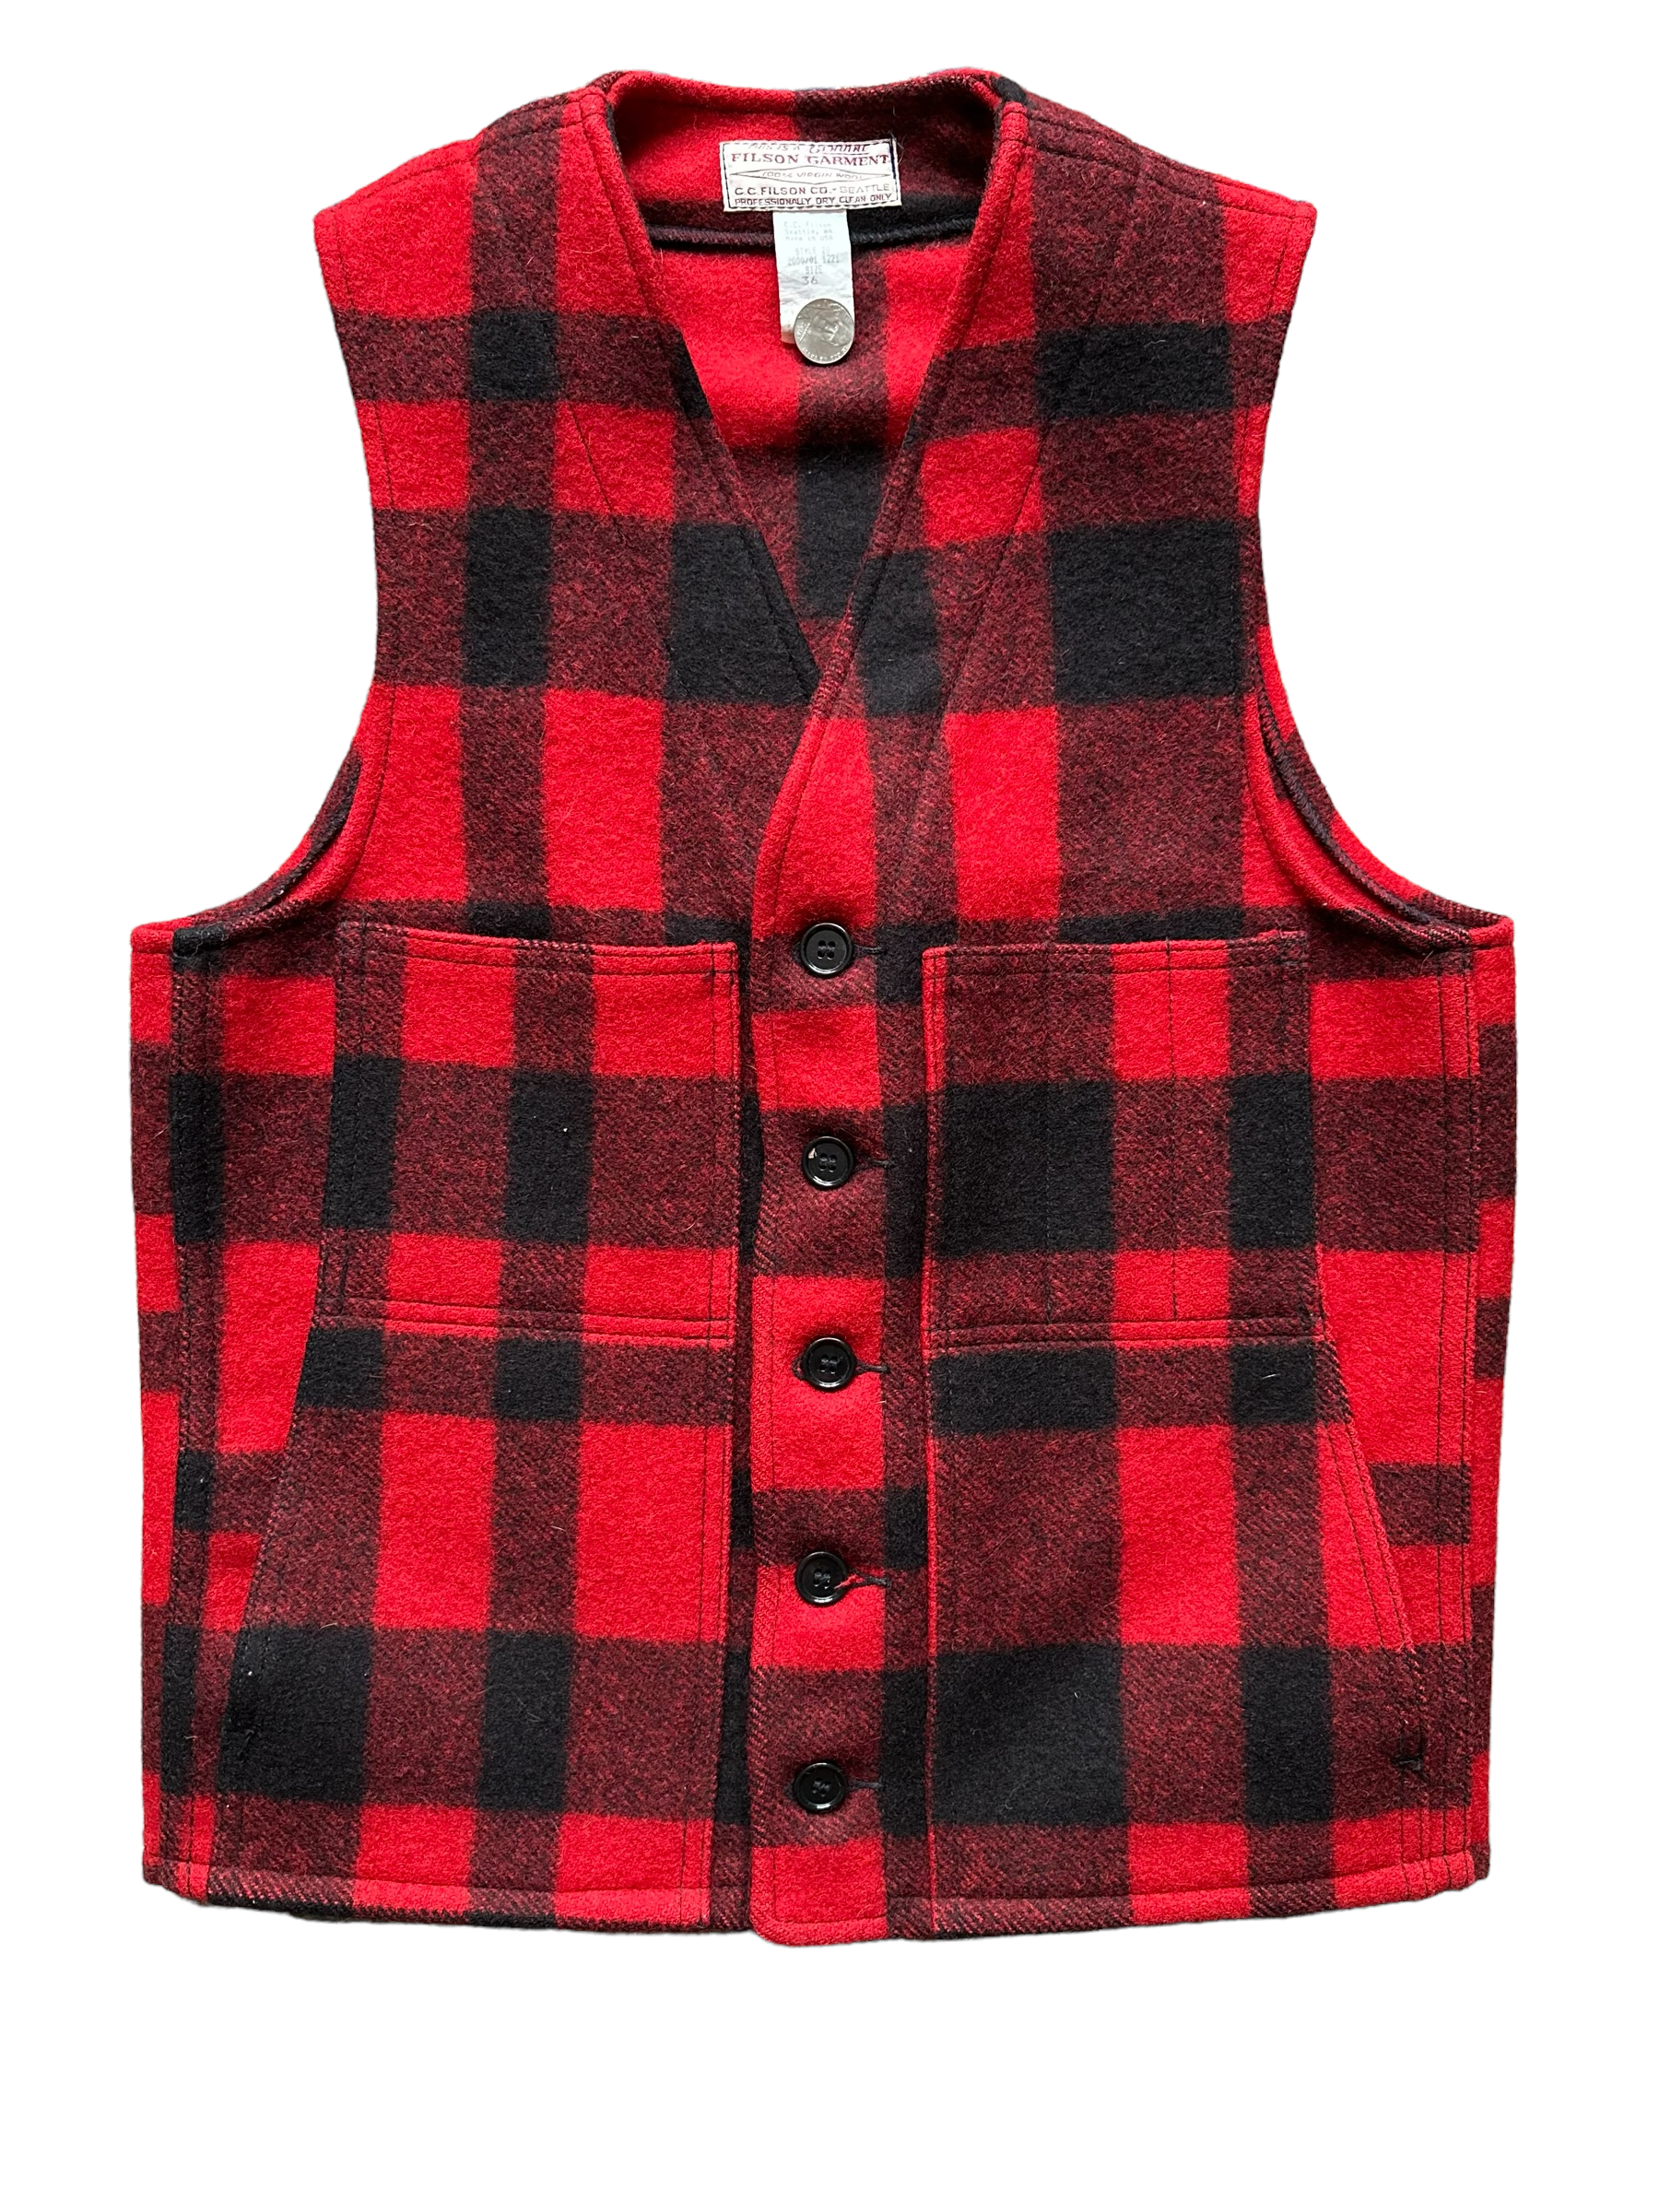 Front View of Vintage Filson Mackinaw Vest SZ 36 |  Red & Black Mackinaw Wool | Seattle Workwear